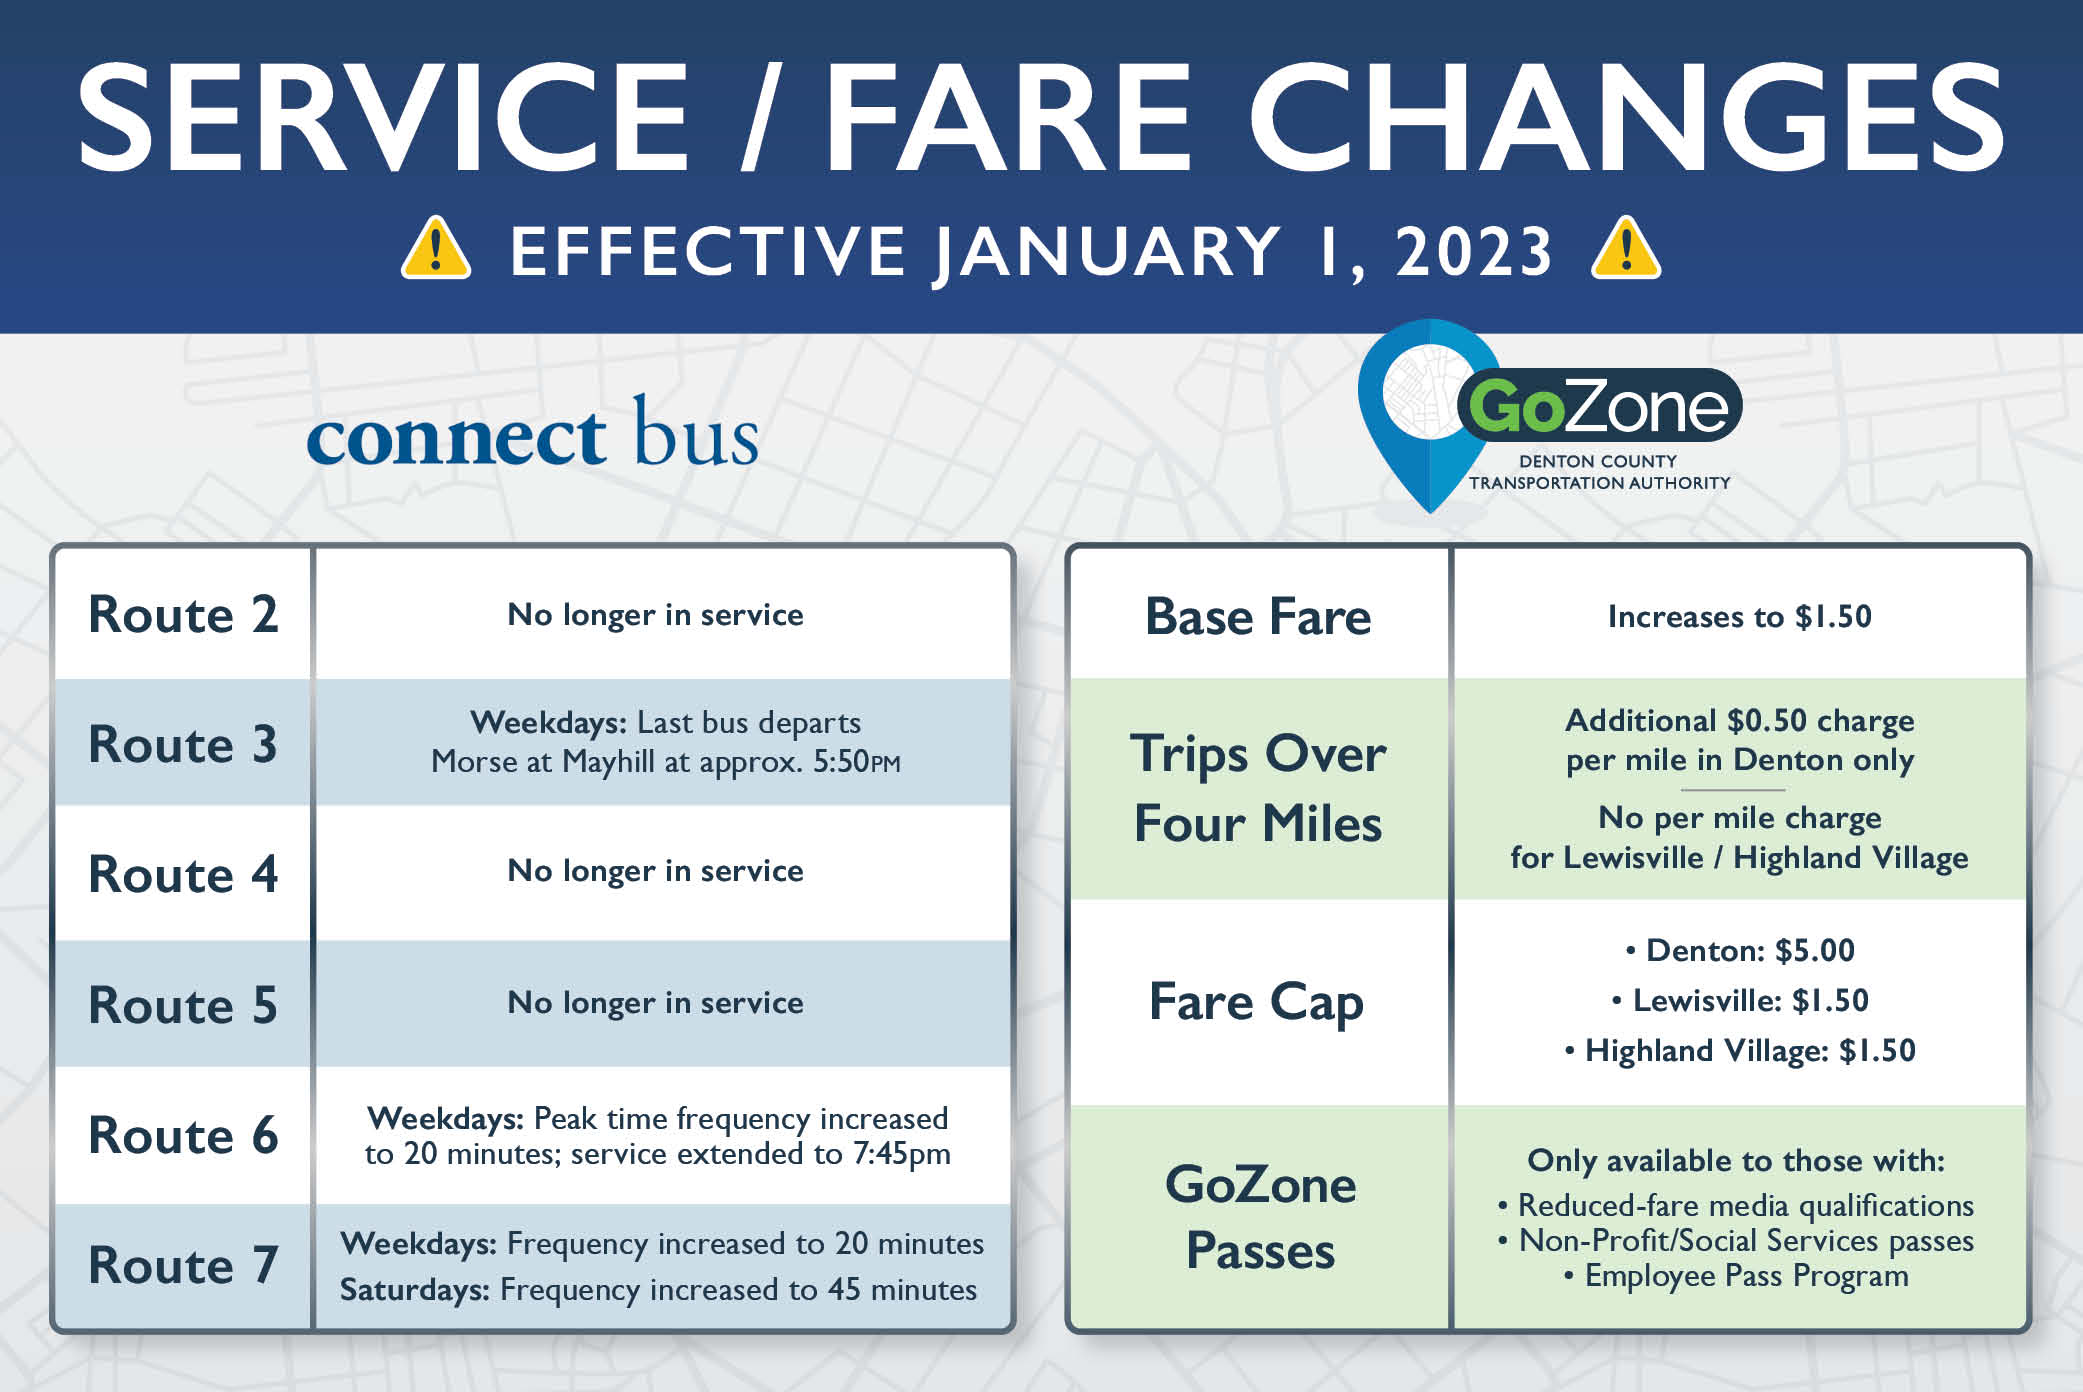 Service / Fare Changes